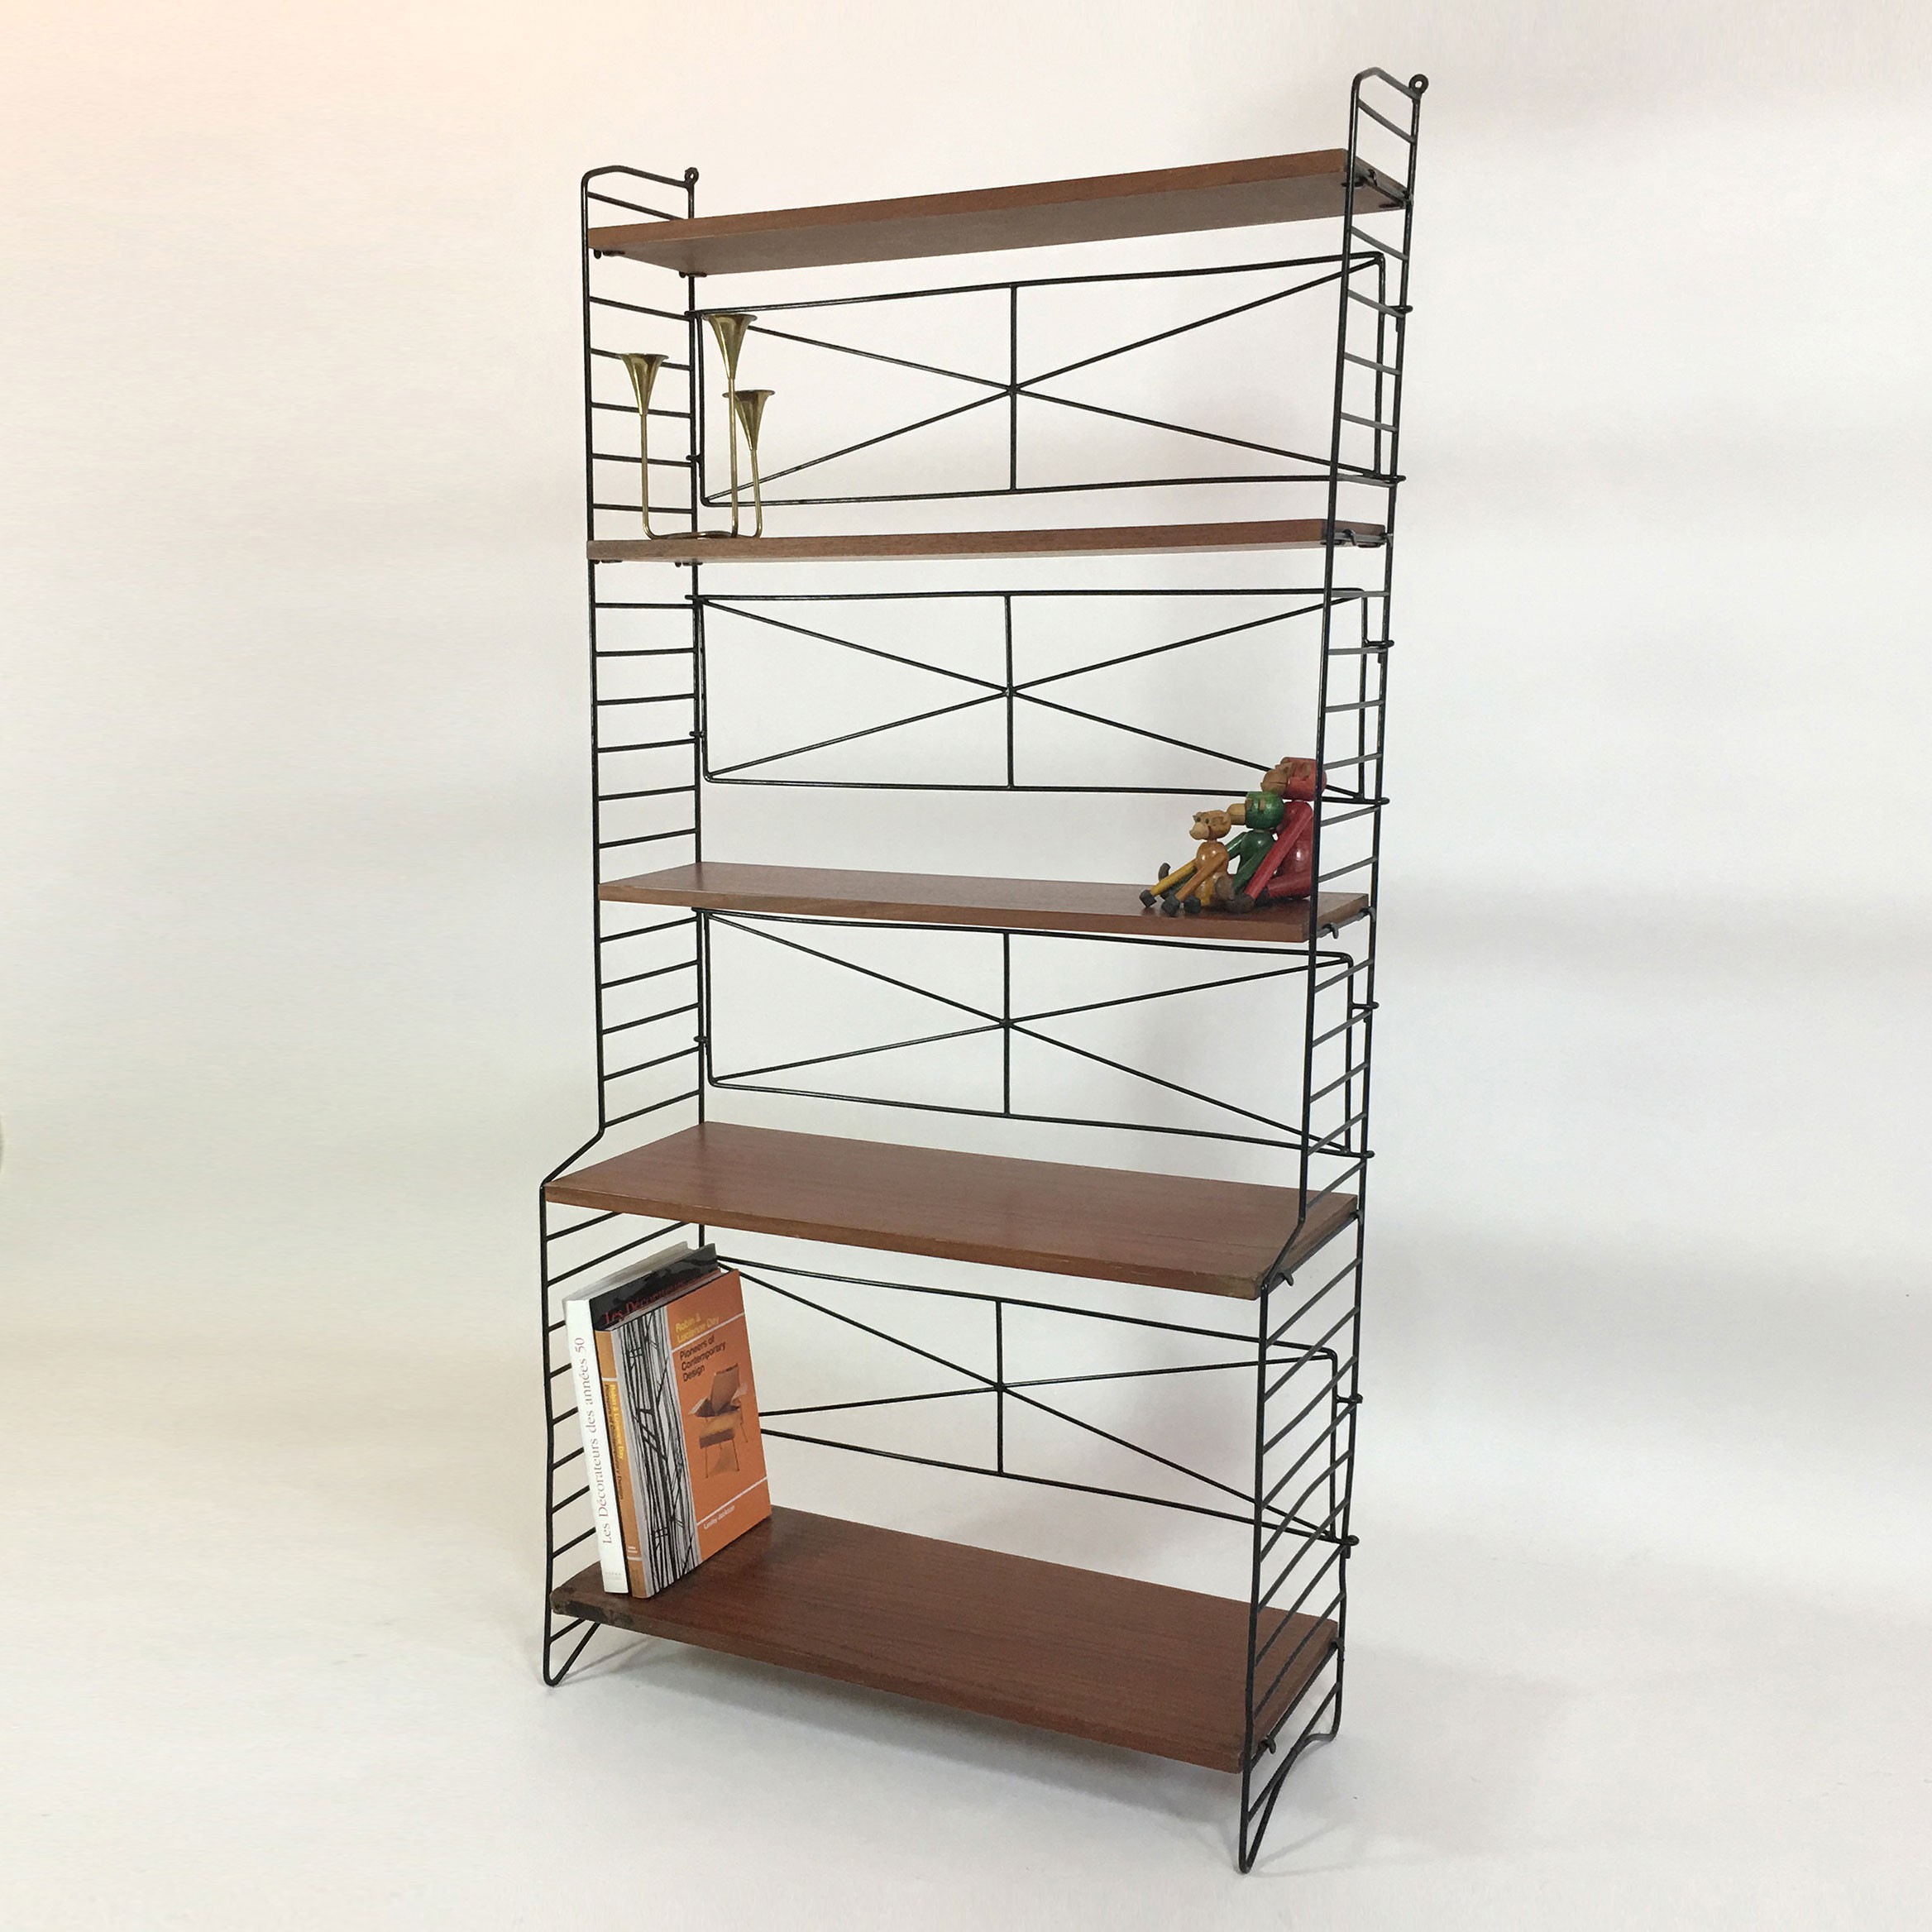 Minimalist Modular Shelf System for Small Space